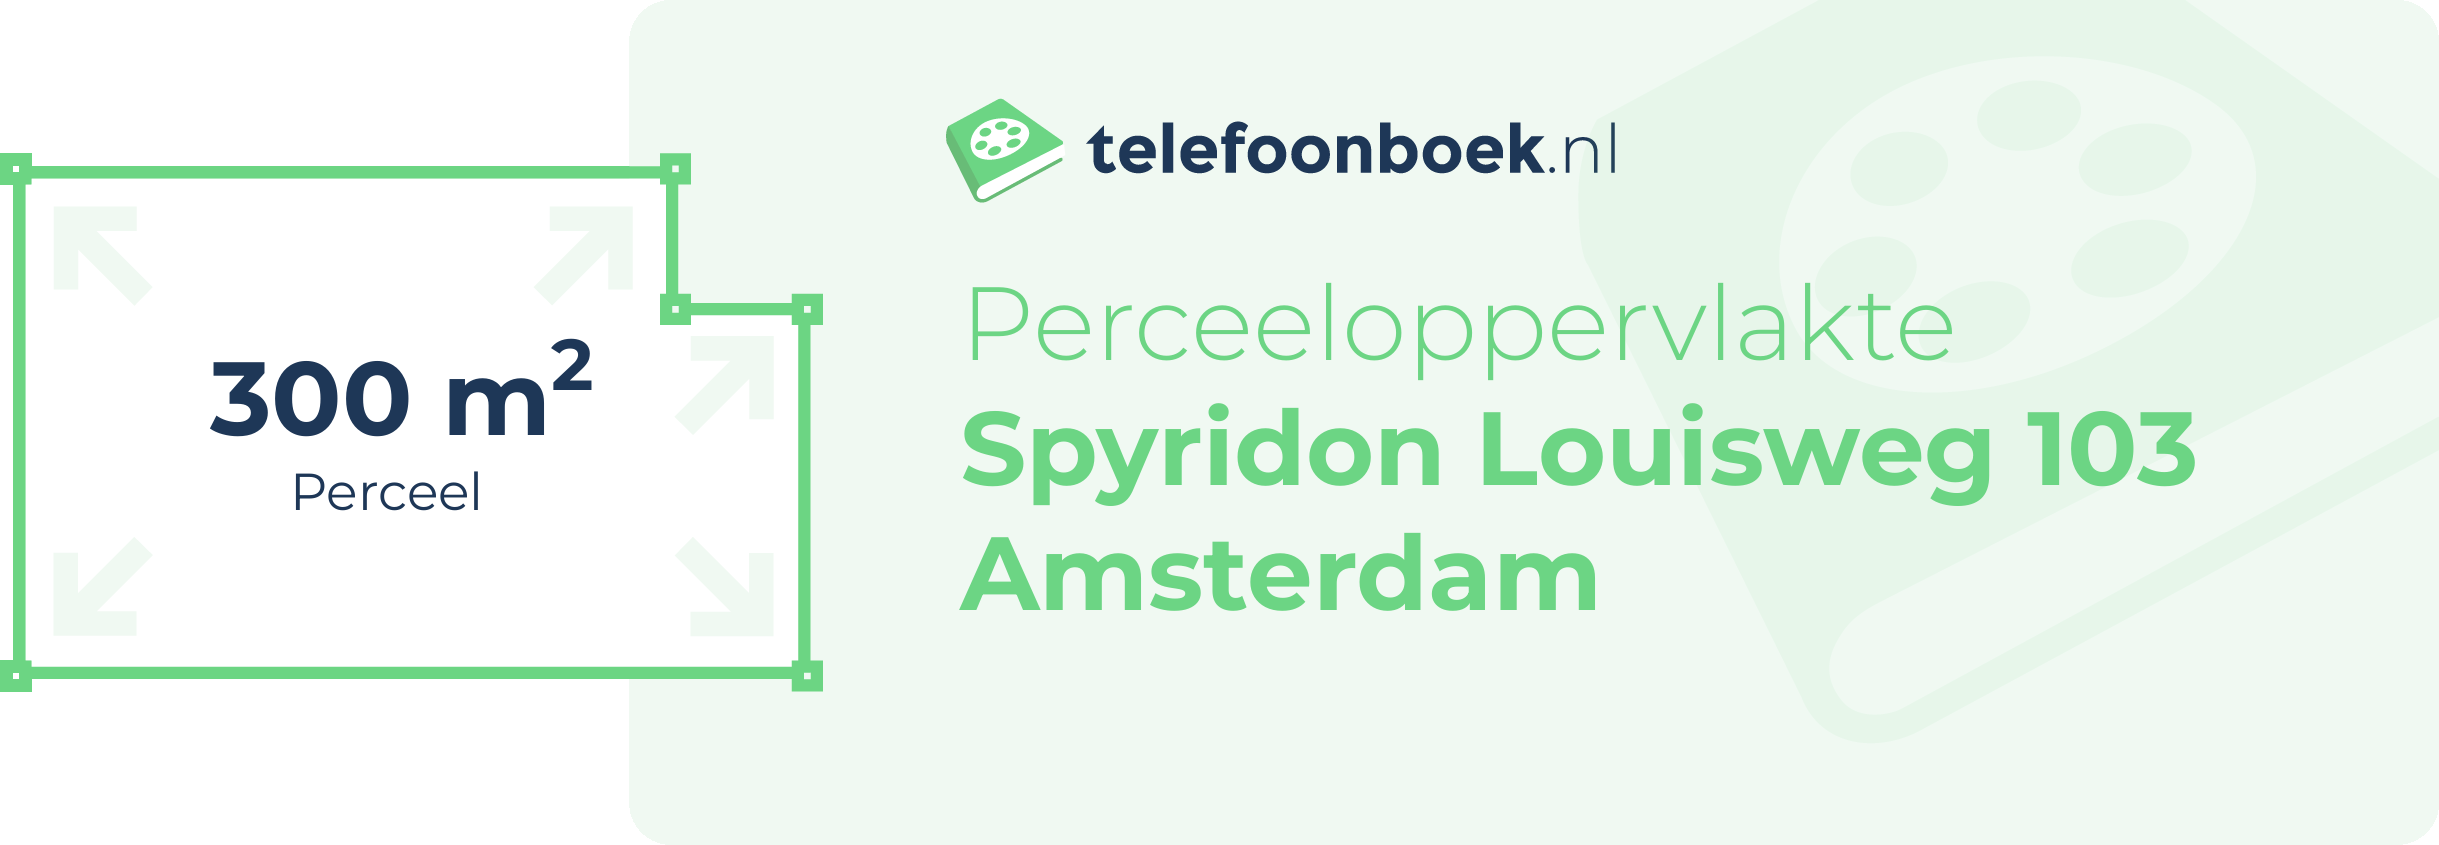 Perceeloppervlakte Spyridon Louisweg 103 Amsterdam